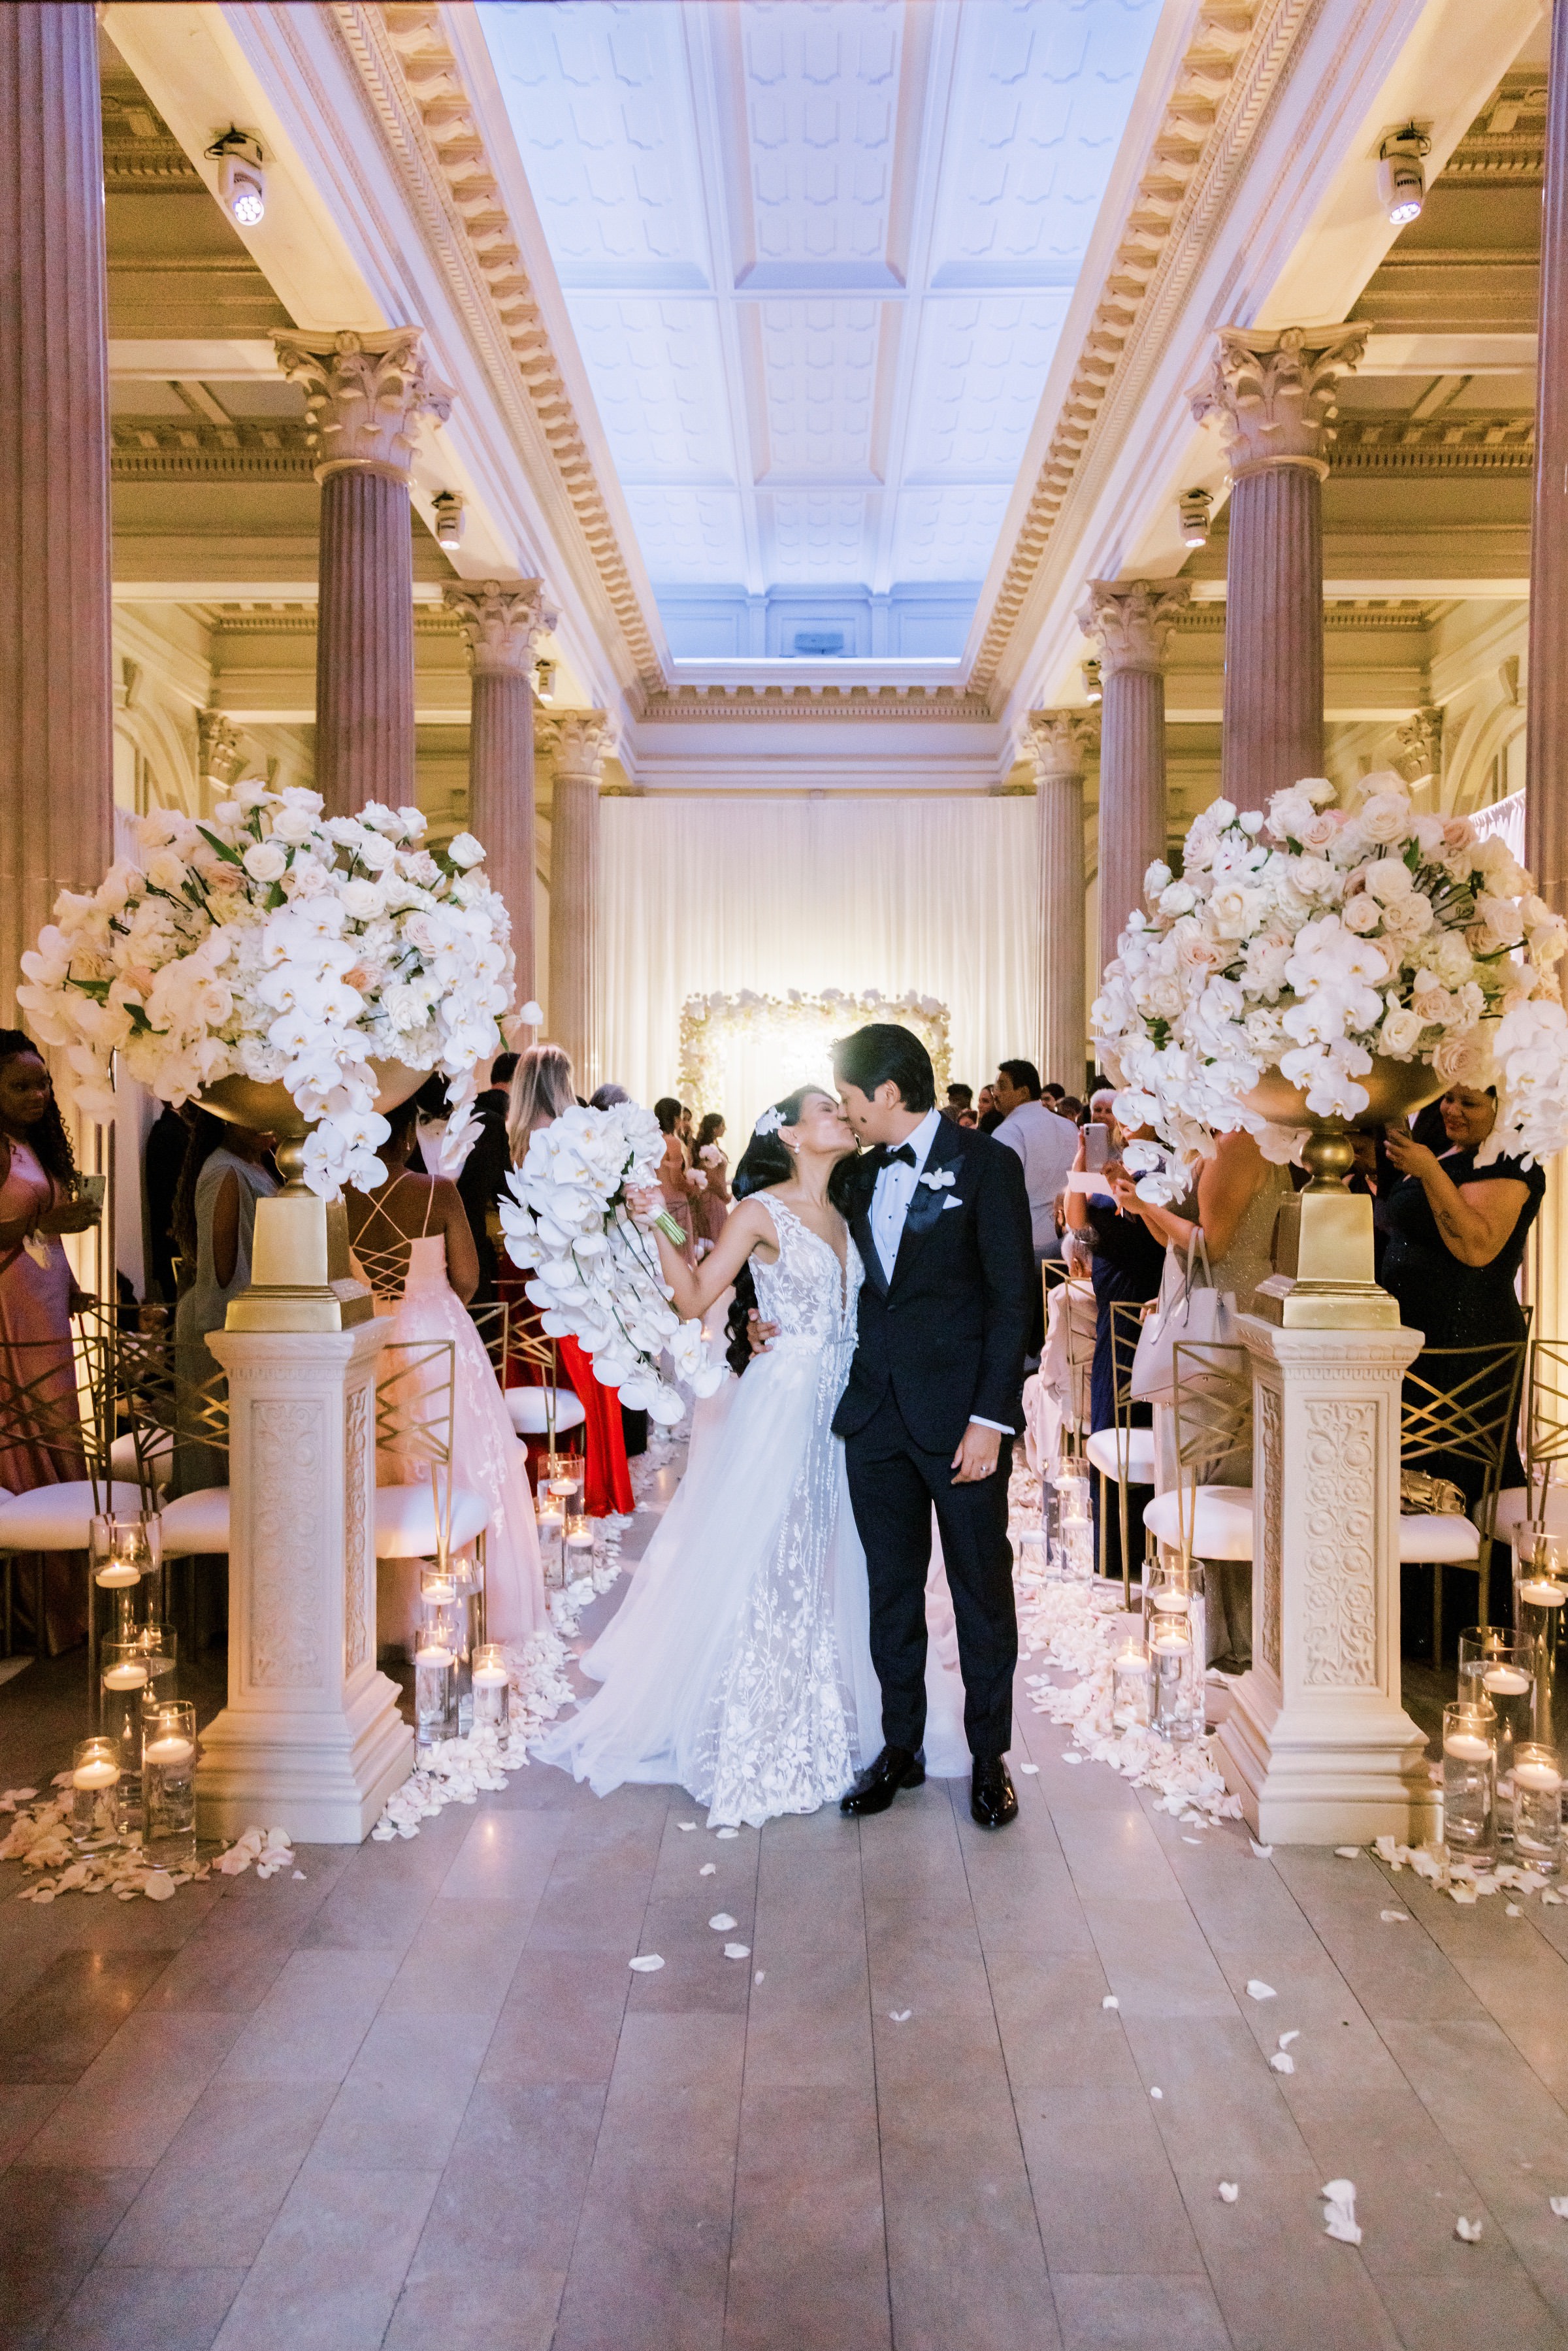 Luxury Ballroom Wedding Ceremony - Photography: Brooke Images